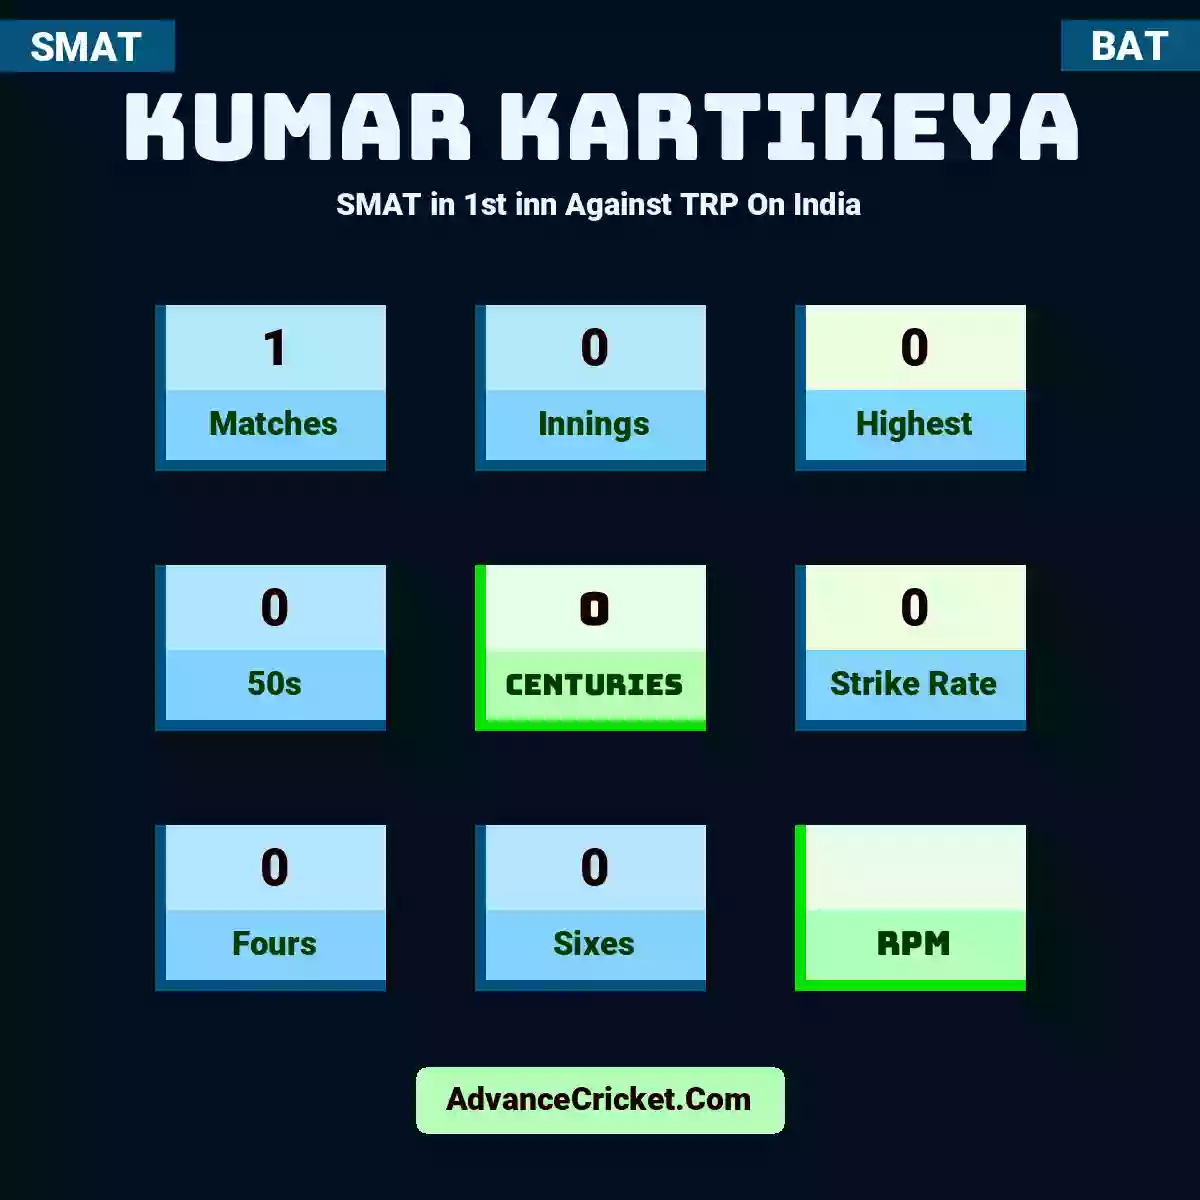 Kumar Kartikeya SMAT  in 1st inn Against TRP On India, Kumar Kartikeya played 1 matches, scored 0 runs as highest, 0 half-centuries, and 0 centuries, with a strike rate of 0. K.Kartikeya hit 0 fours and 0 sixes.